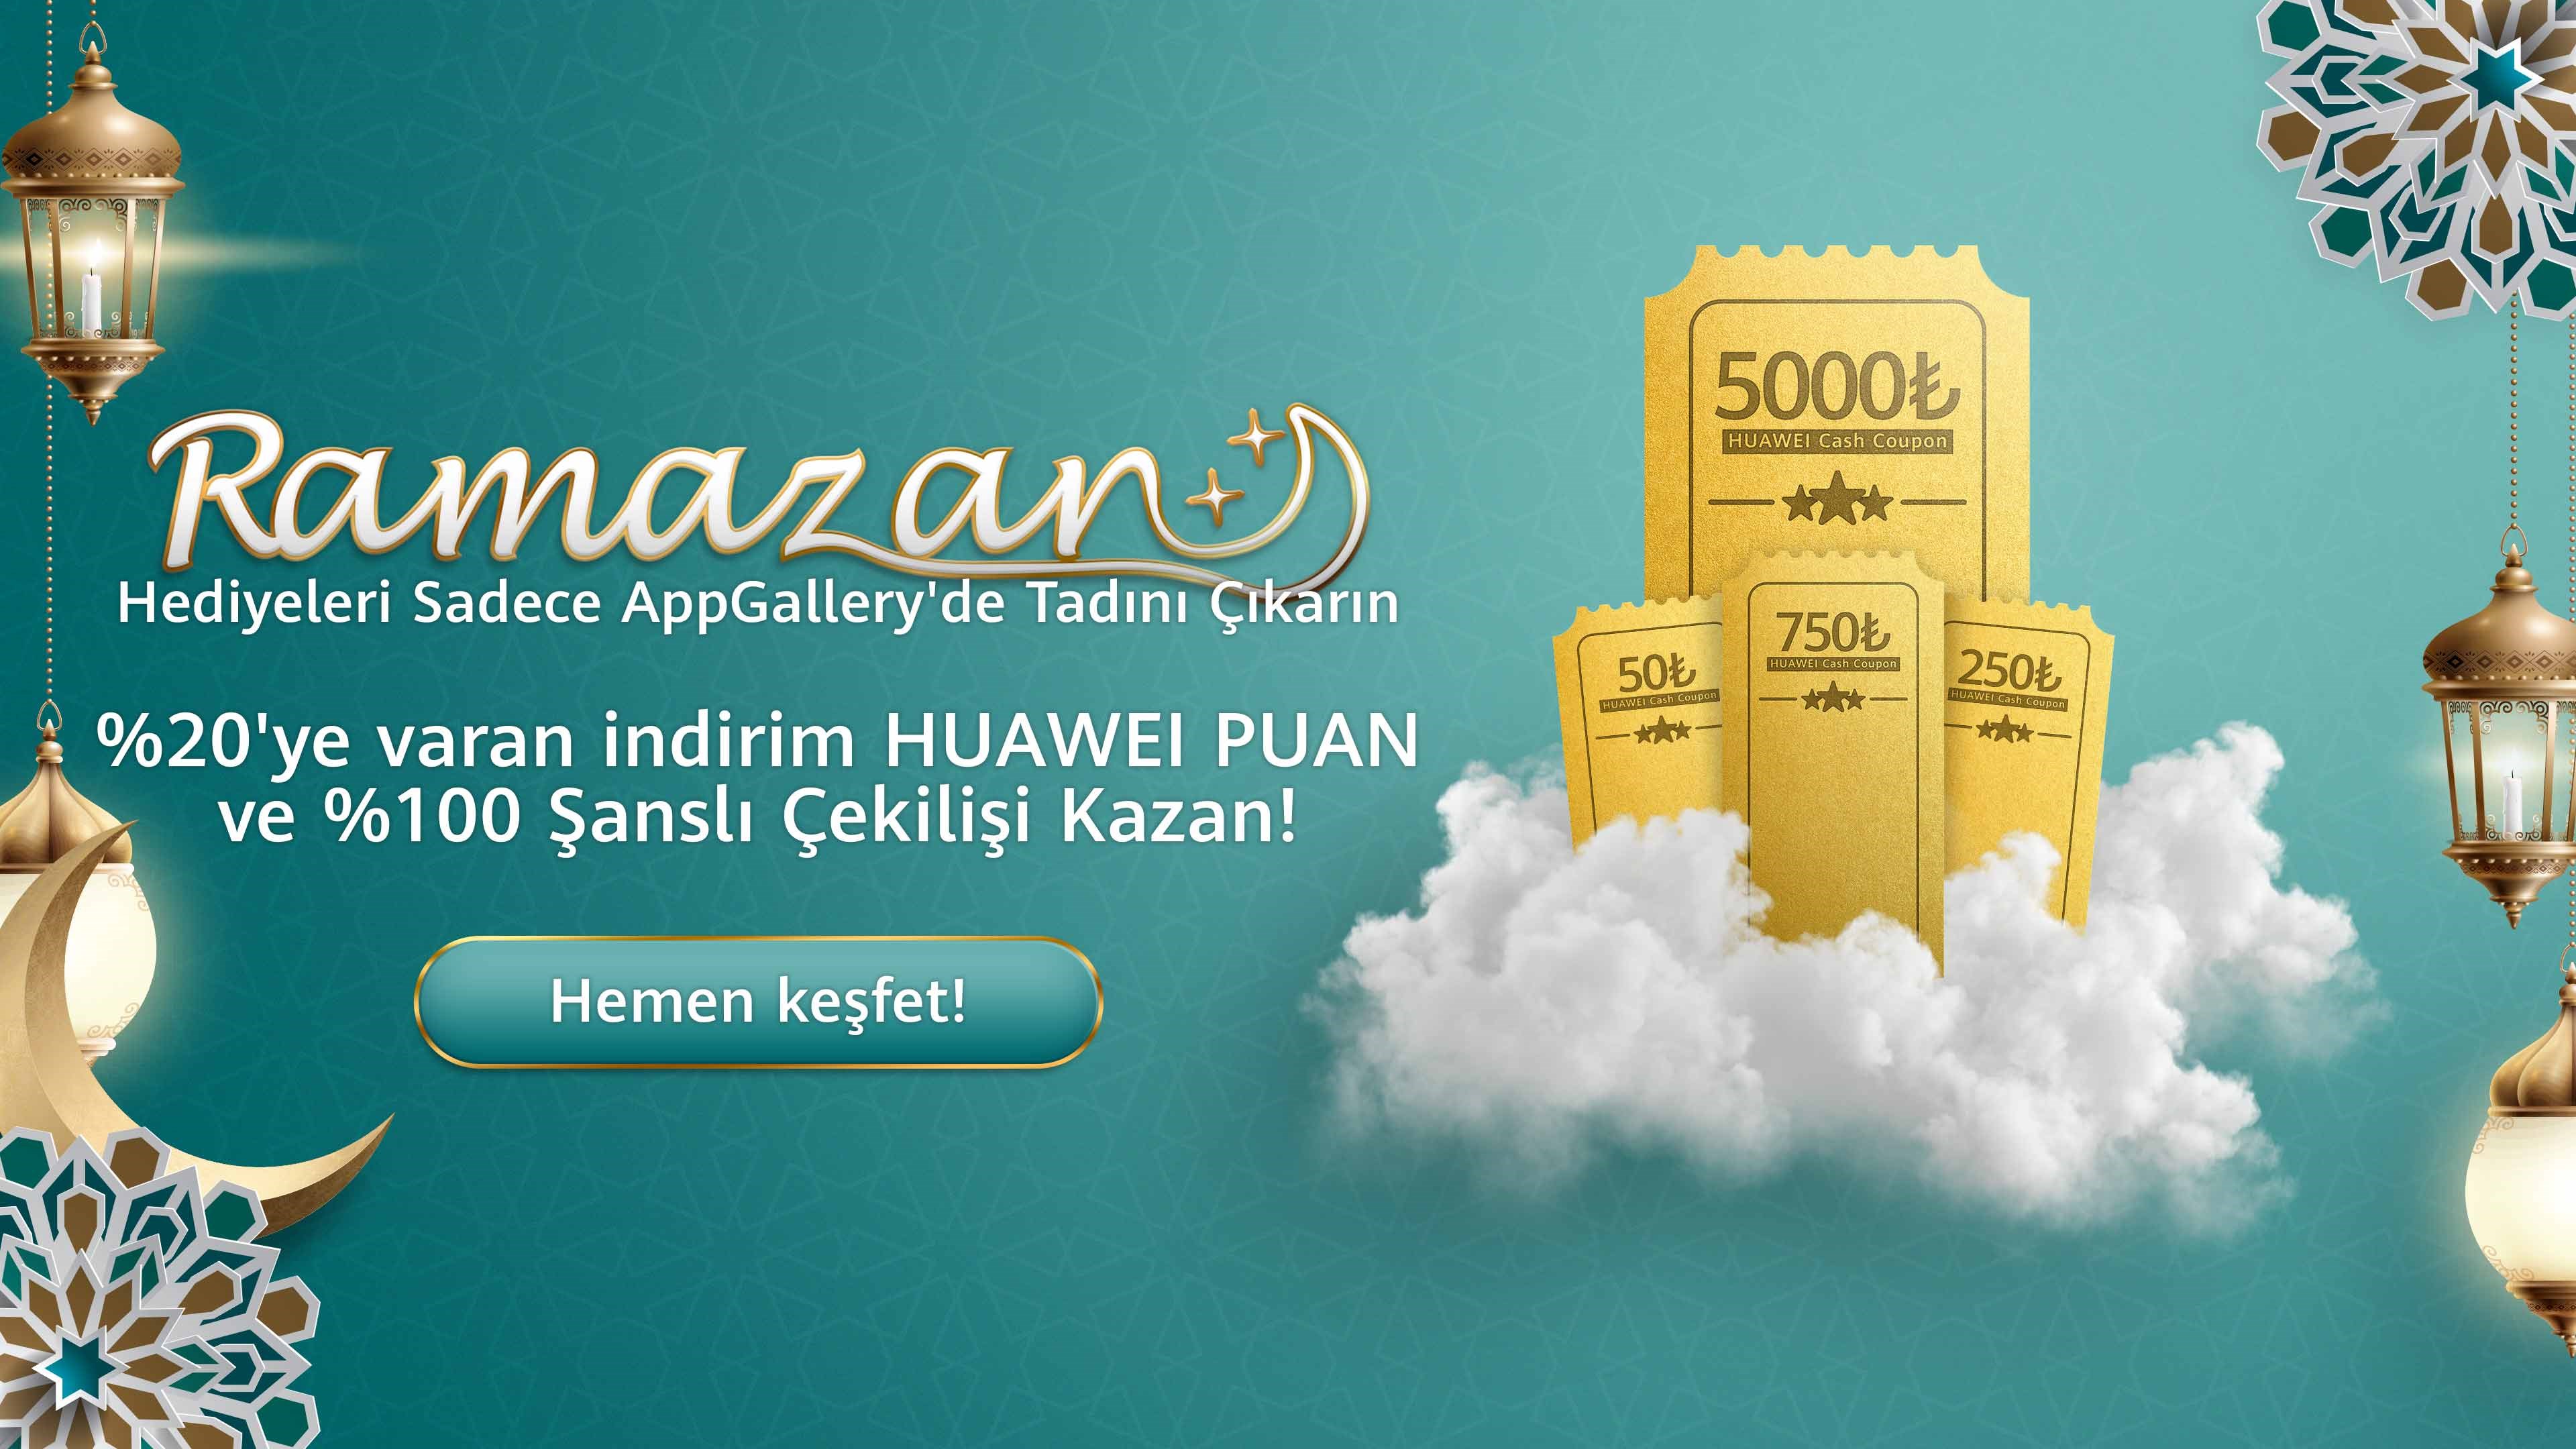 Huawei AppGallery’de 5 milyon TL’ye varan Ramazan kampanyası